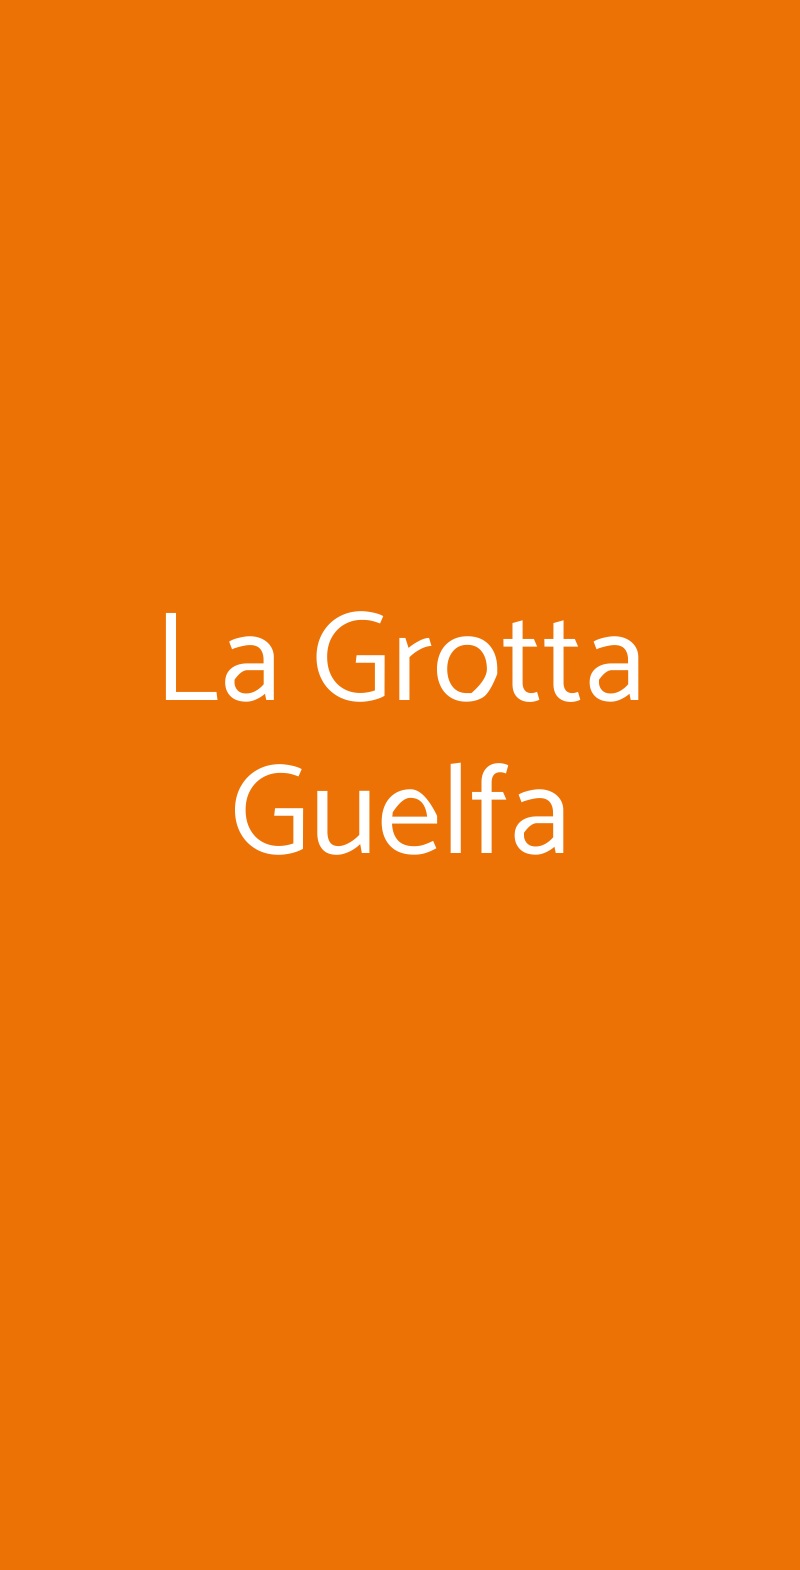 La Grotta Guelfa Firenze menù 1 pagina